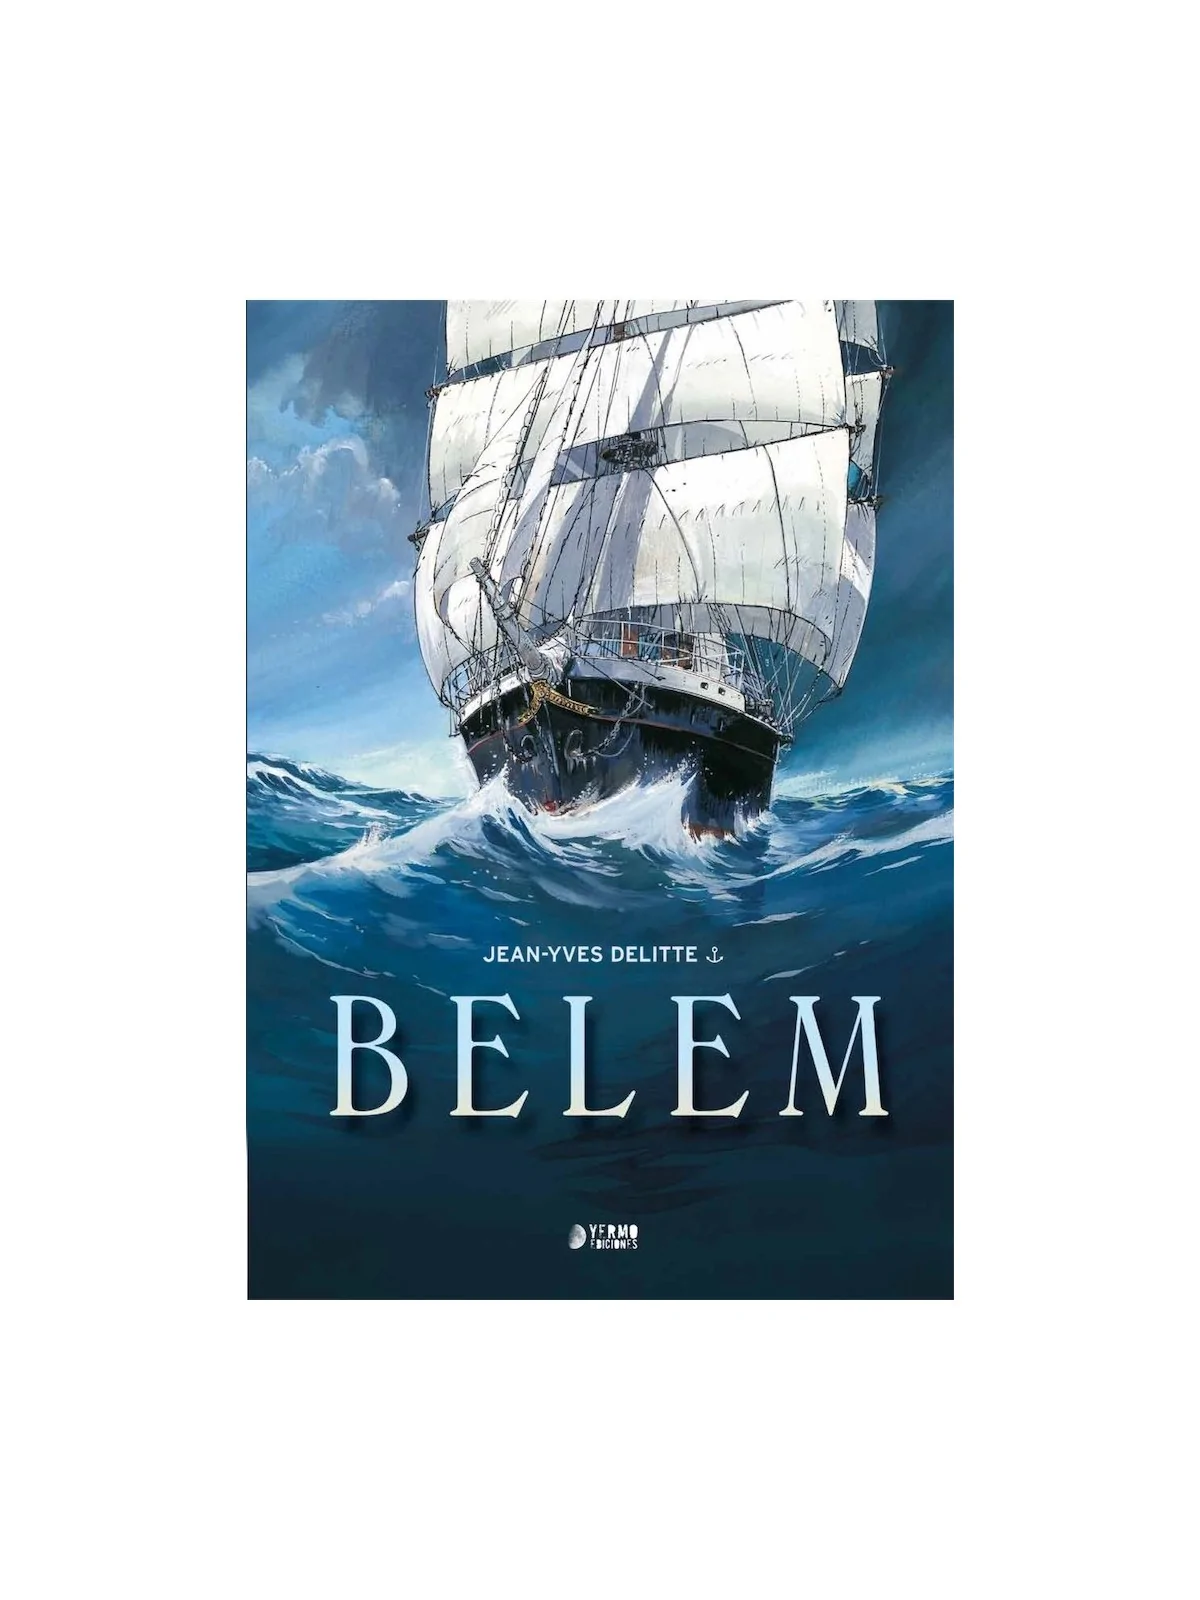 Comprar Belem. Obra Completa barato al mejor precio 38,00 € de Yermo E